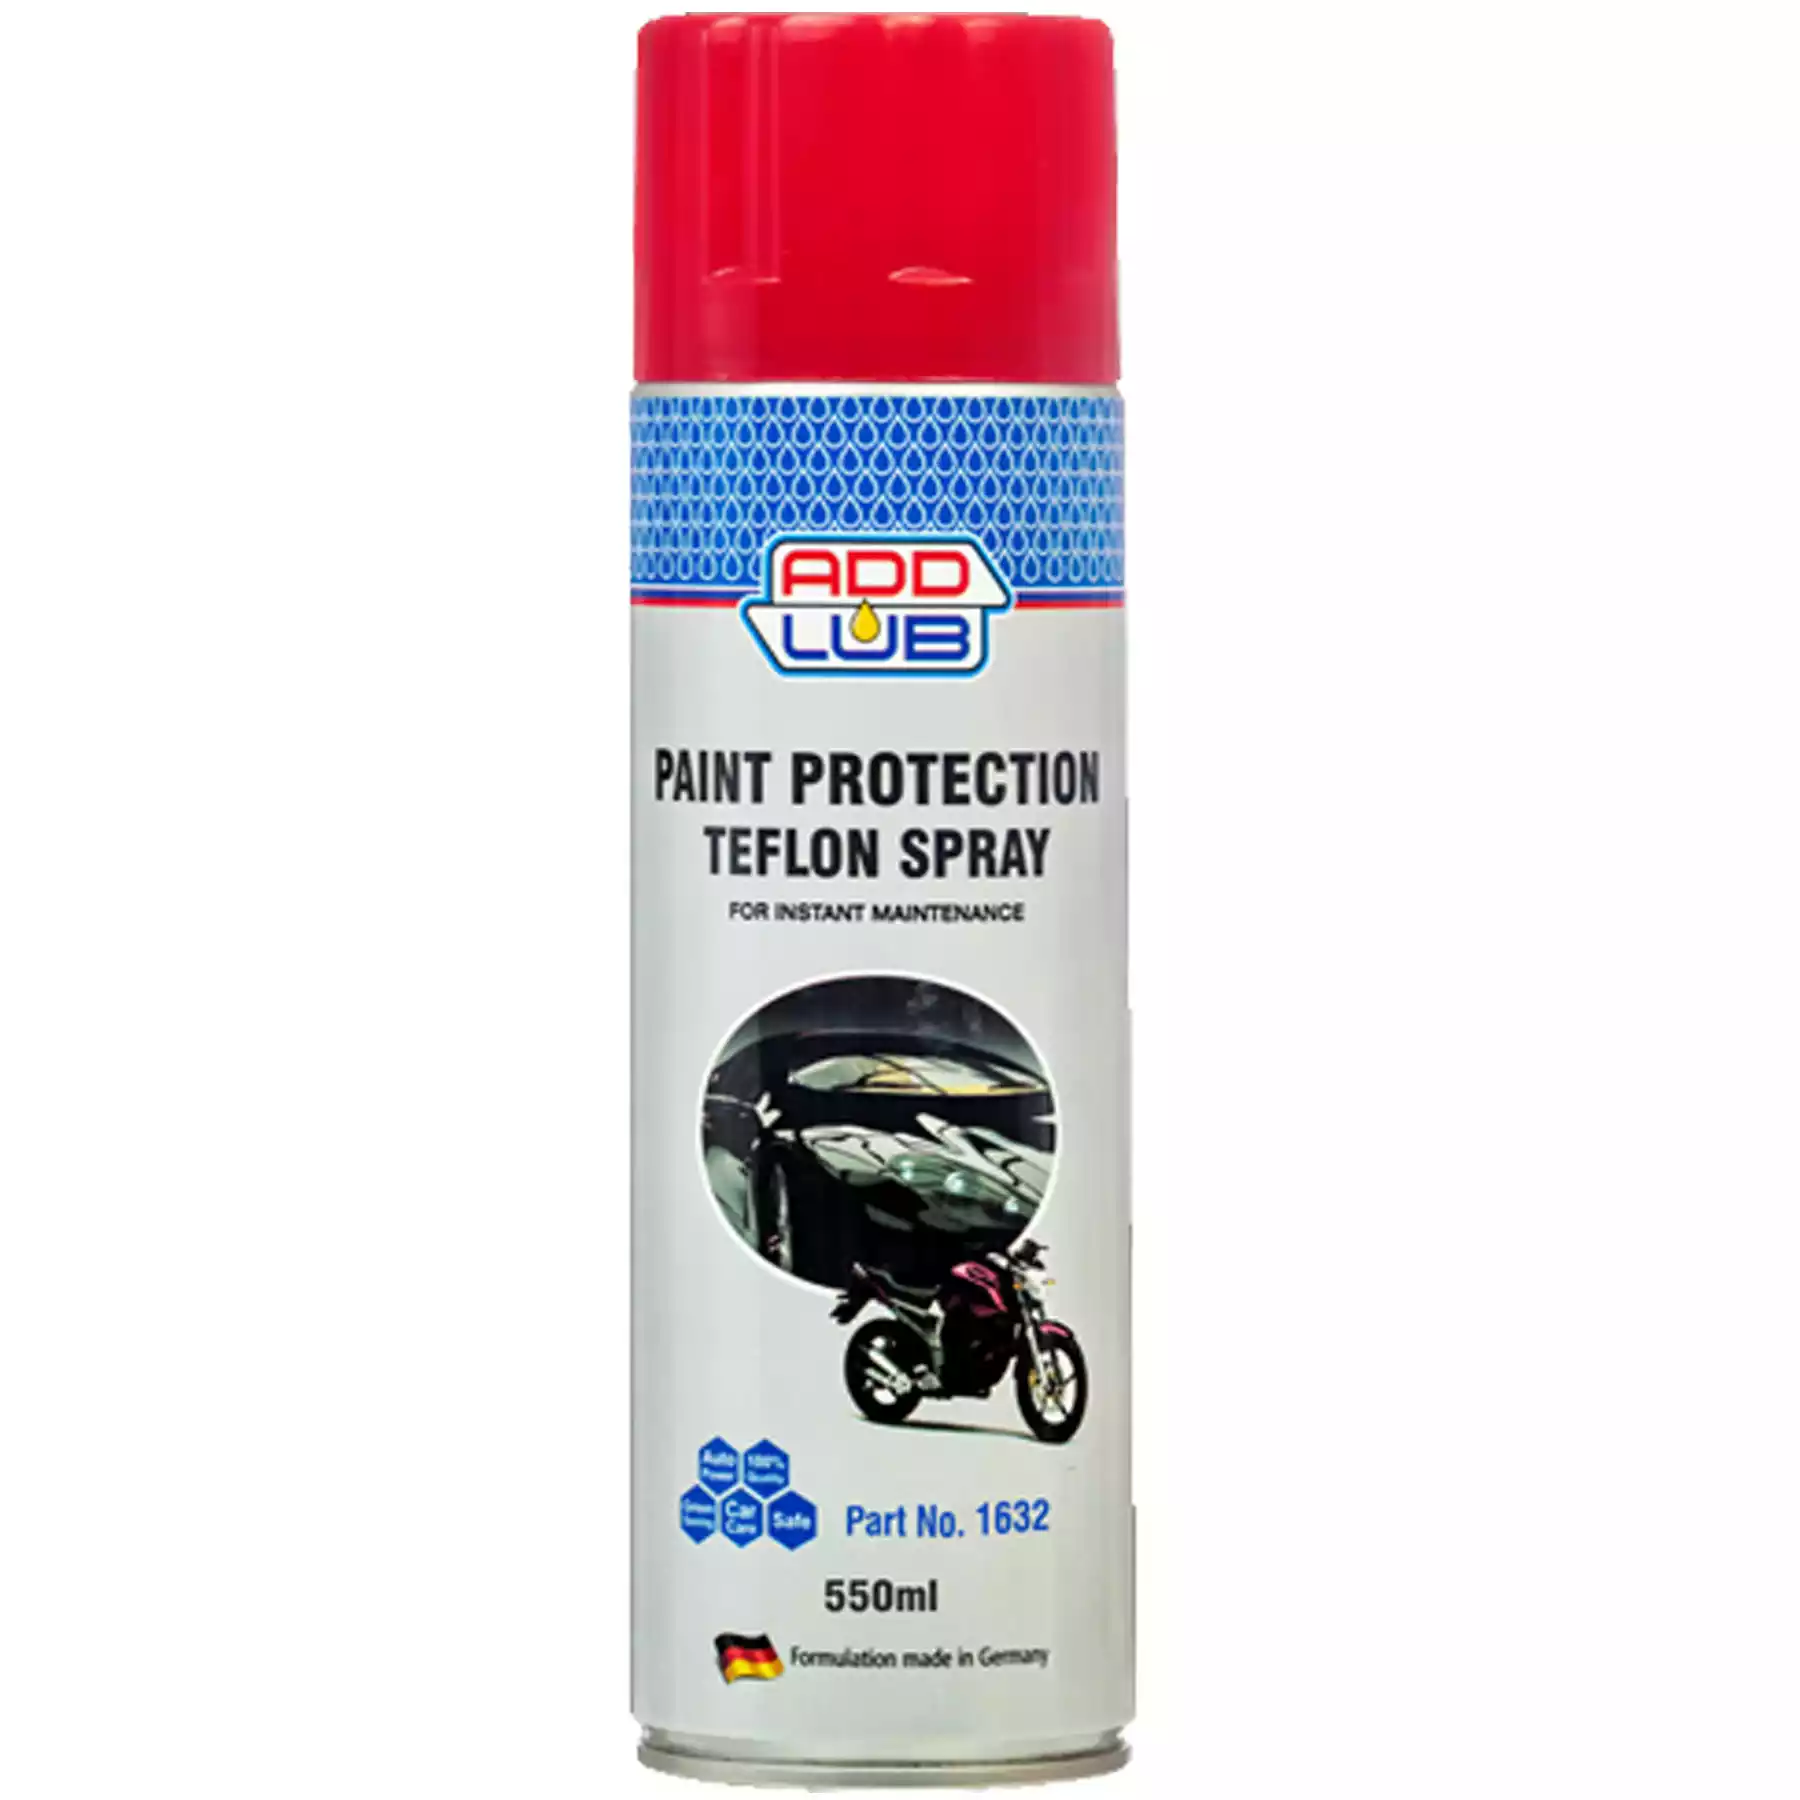 Paint Protection Teflon Spray